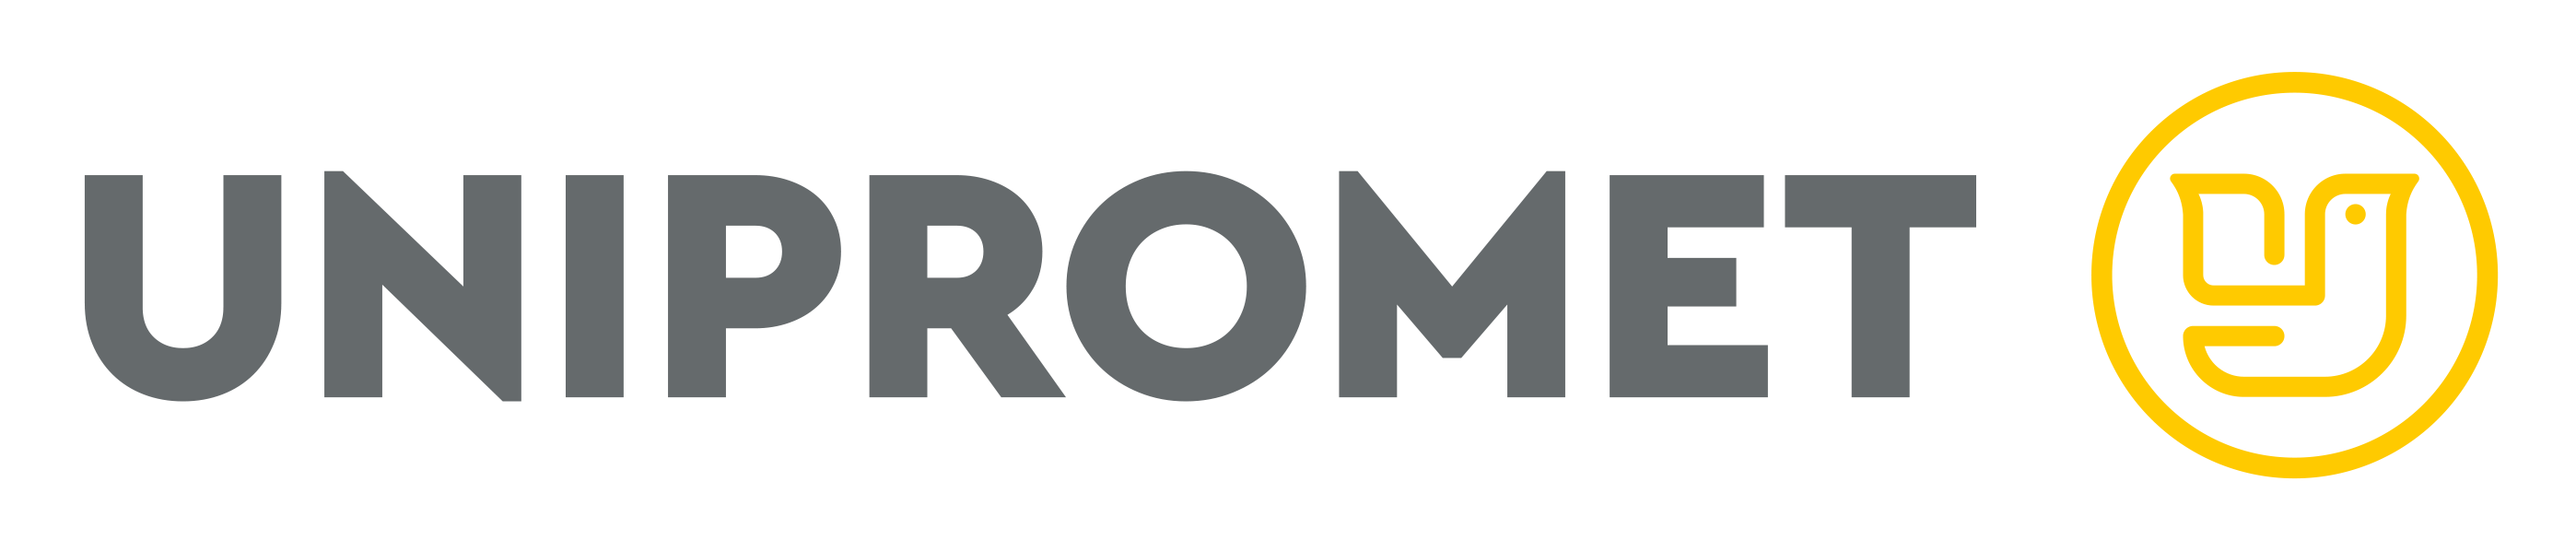 Unipromet Ltd. Čačak logo